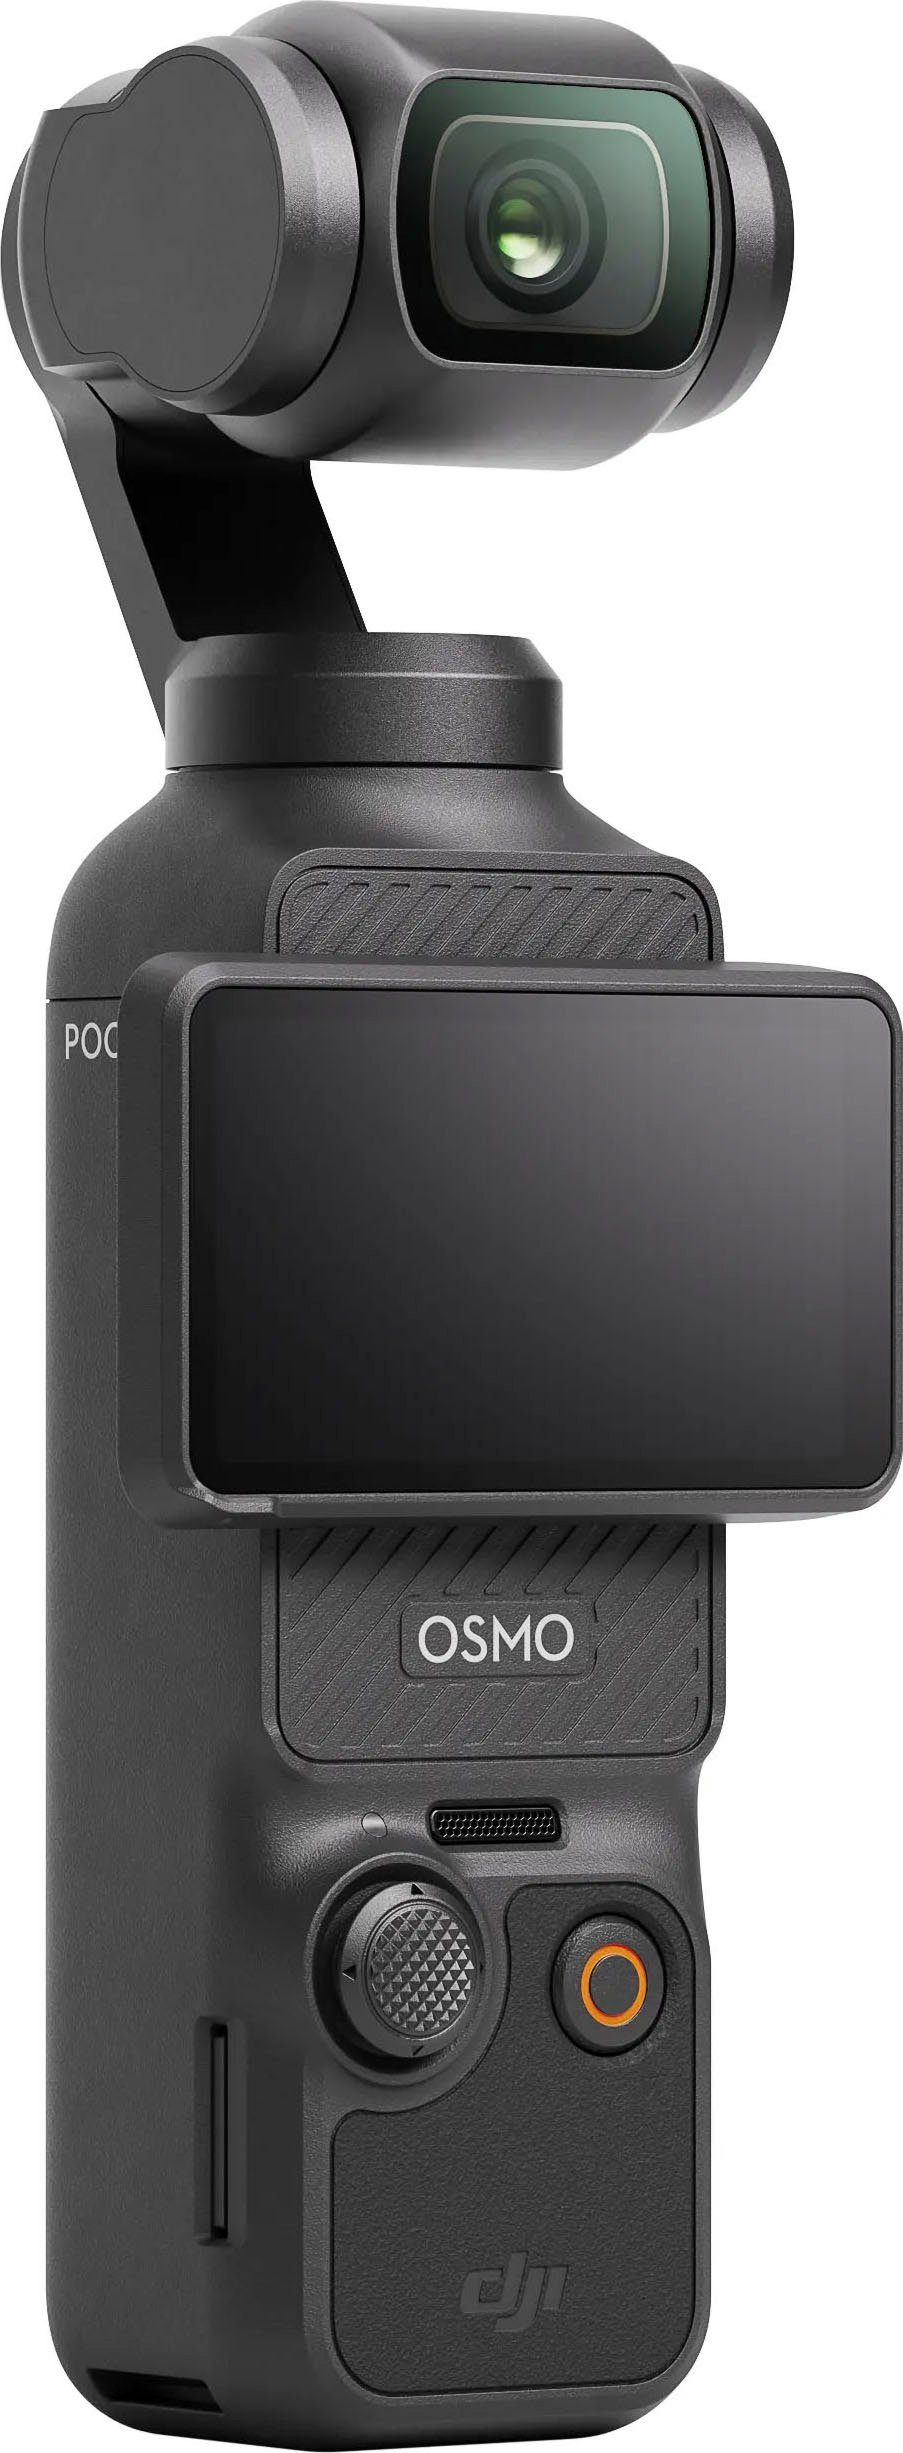 3 Osmo HD, Pocket DJI Bluetooth) (4K Camcorder Ultra